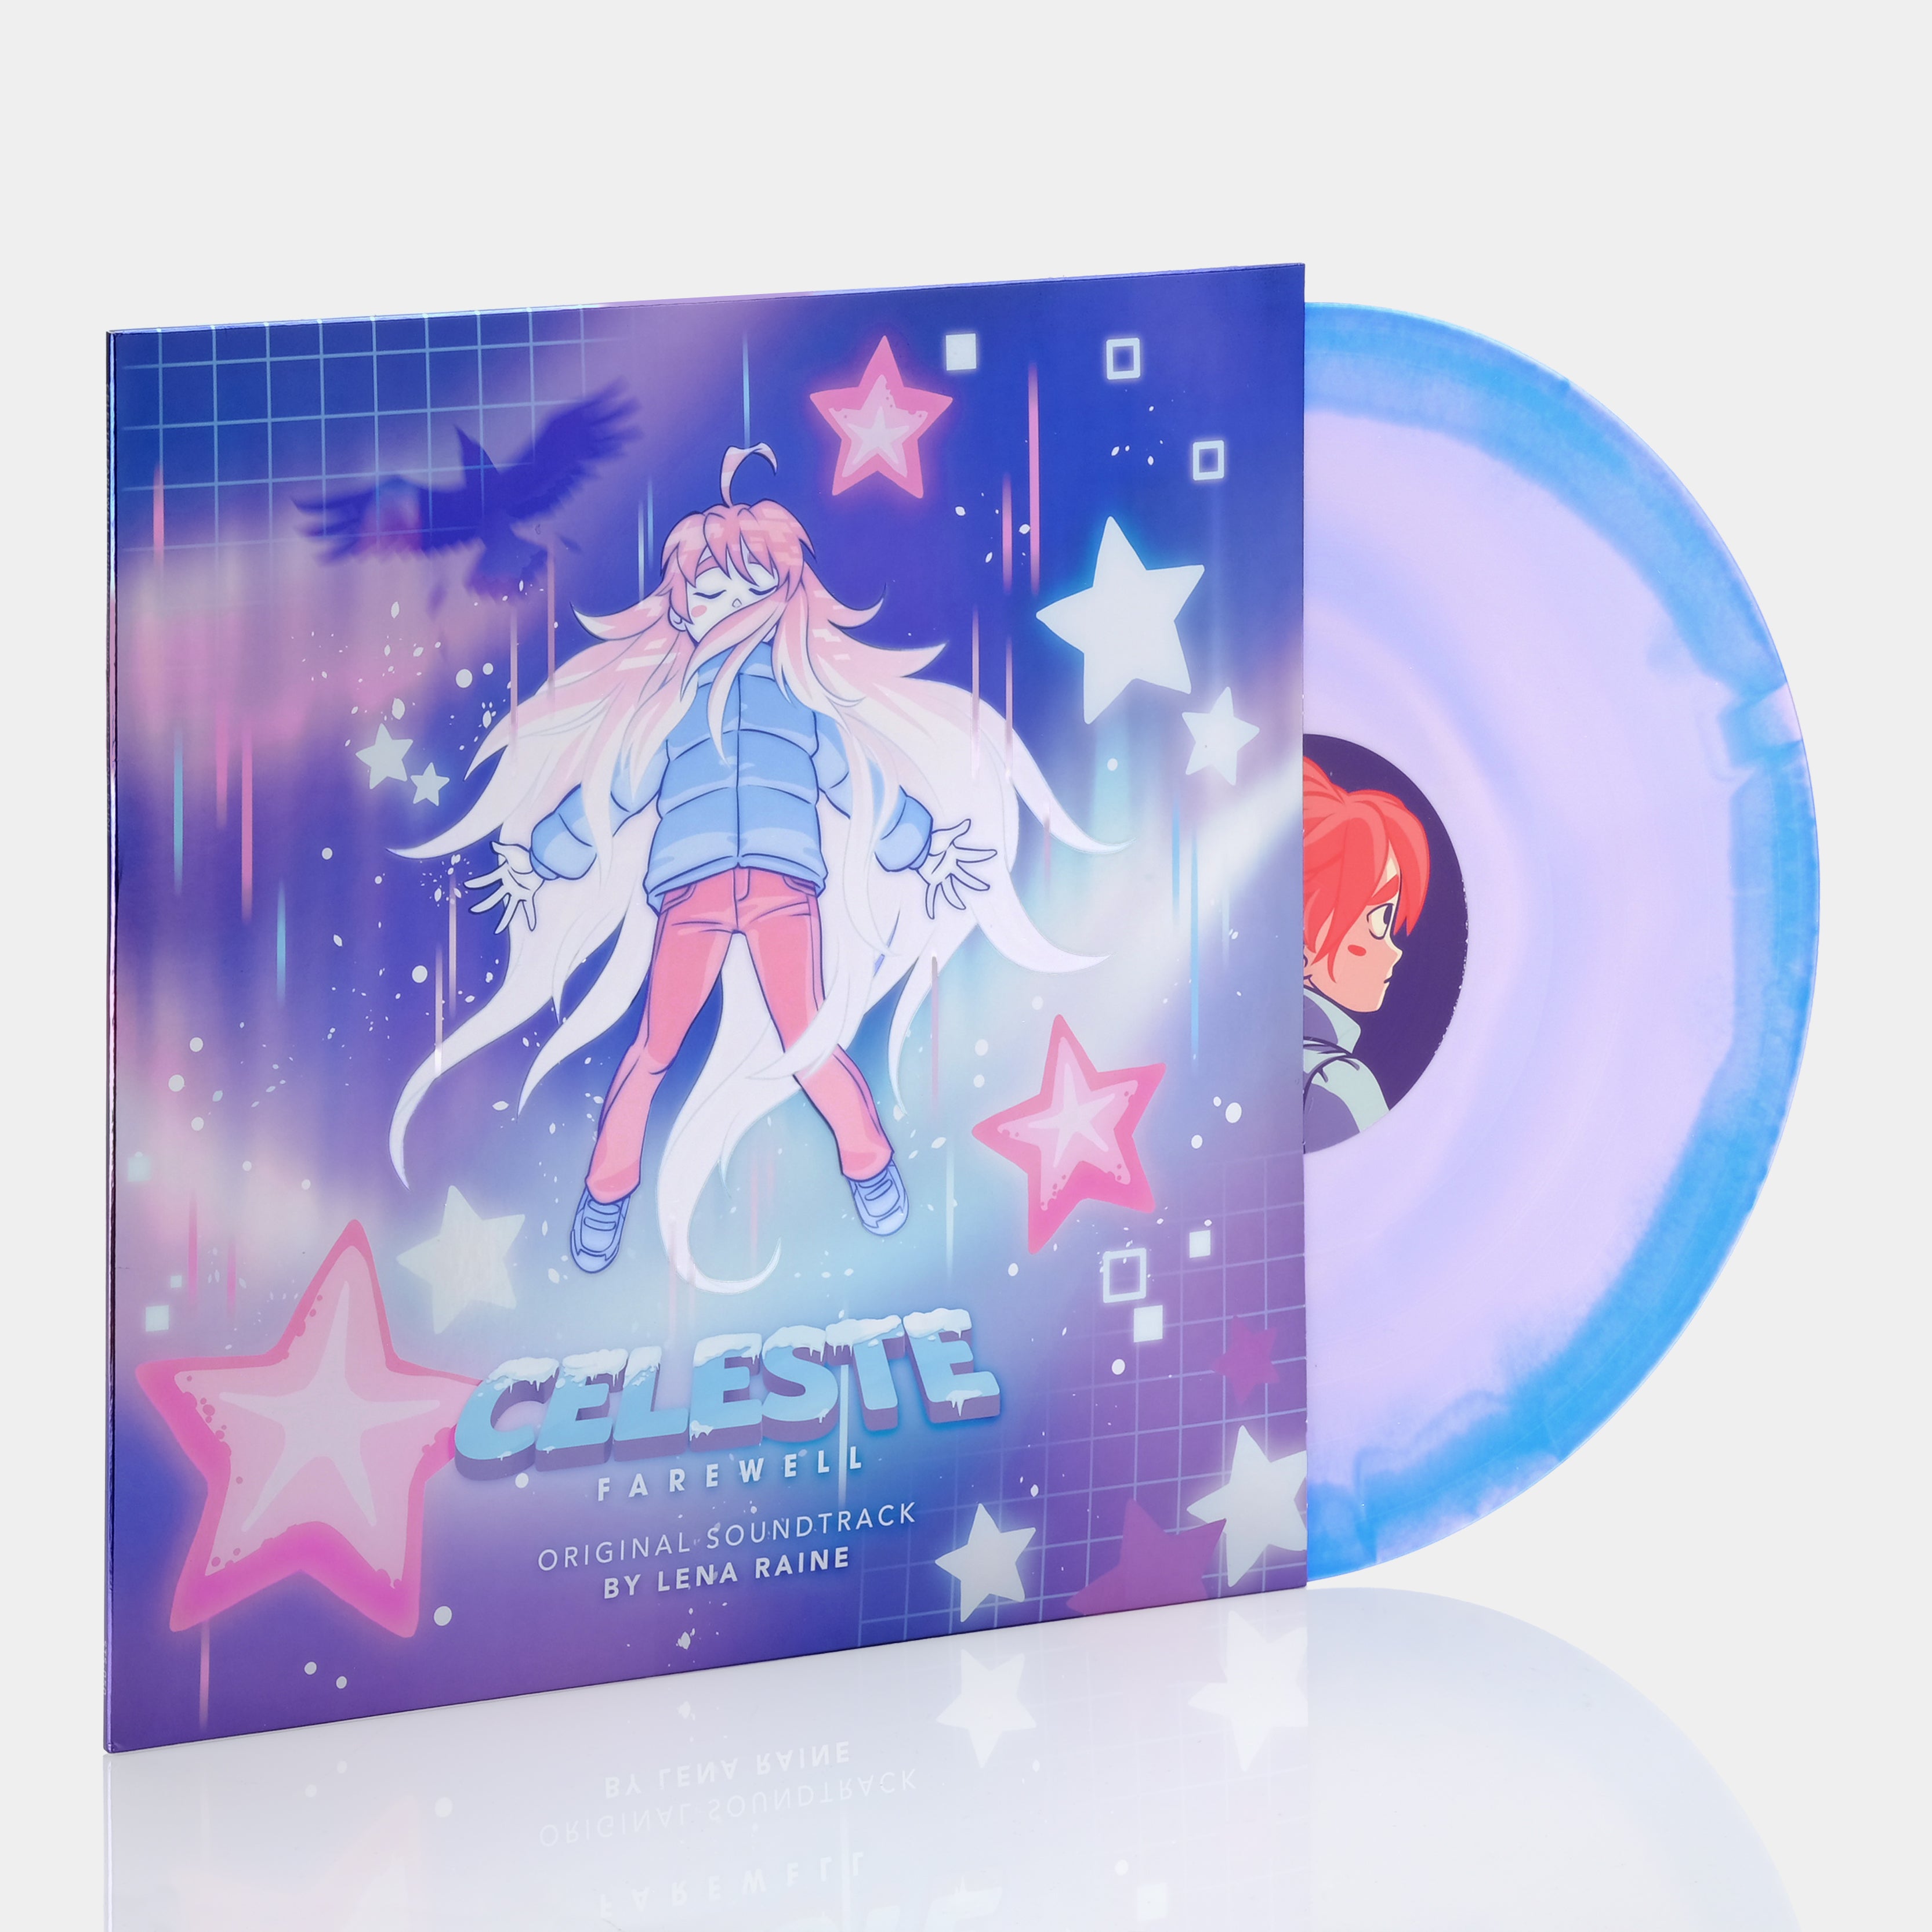 Lena Raine - Celeste: Farewell (Original Soundtrack) LP Blue and Pink Swirl  Vinyl Record